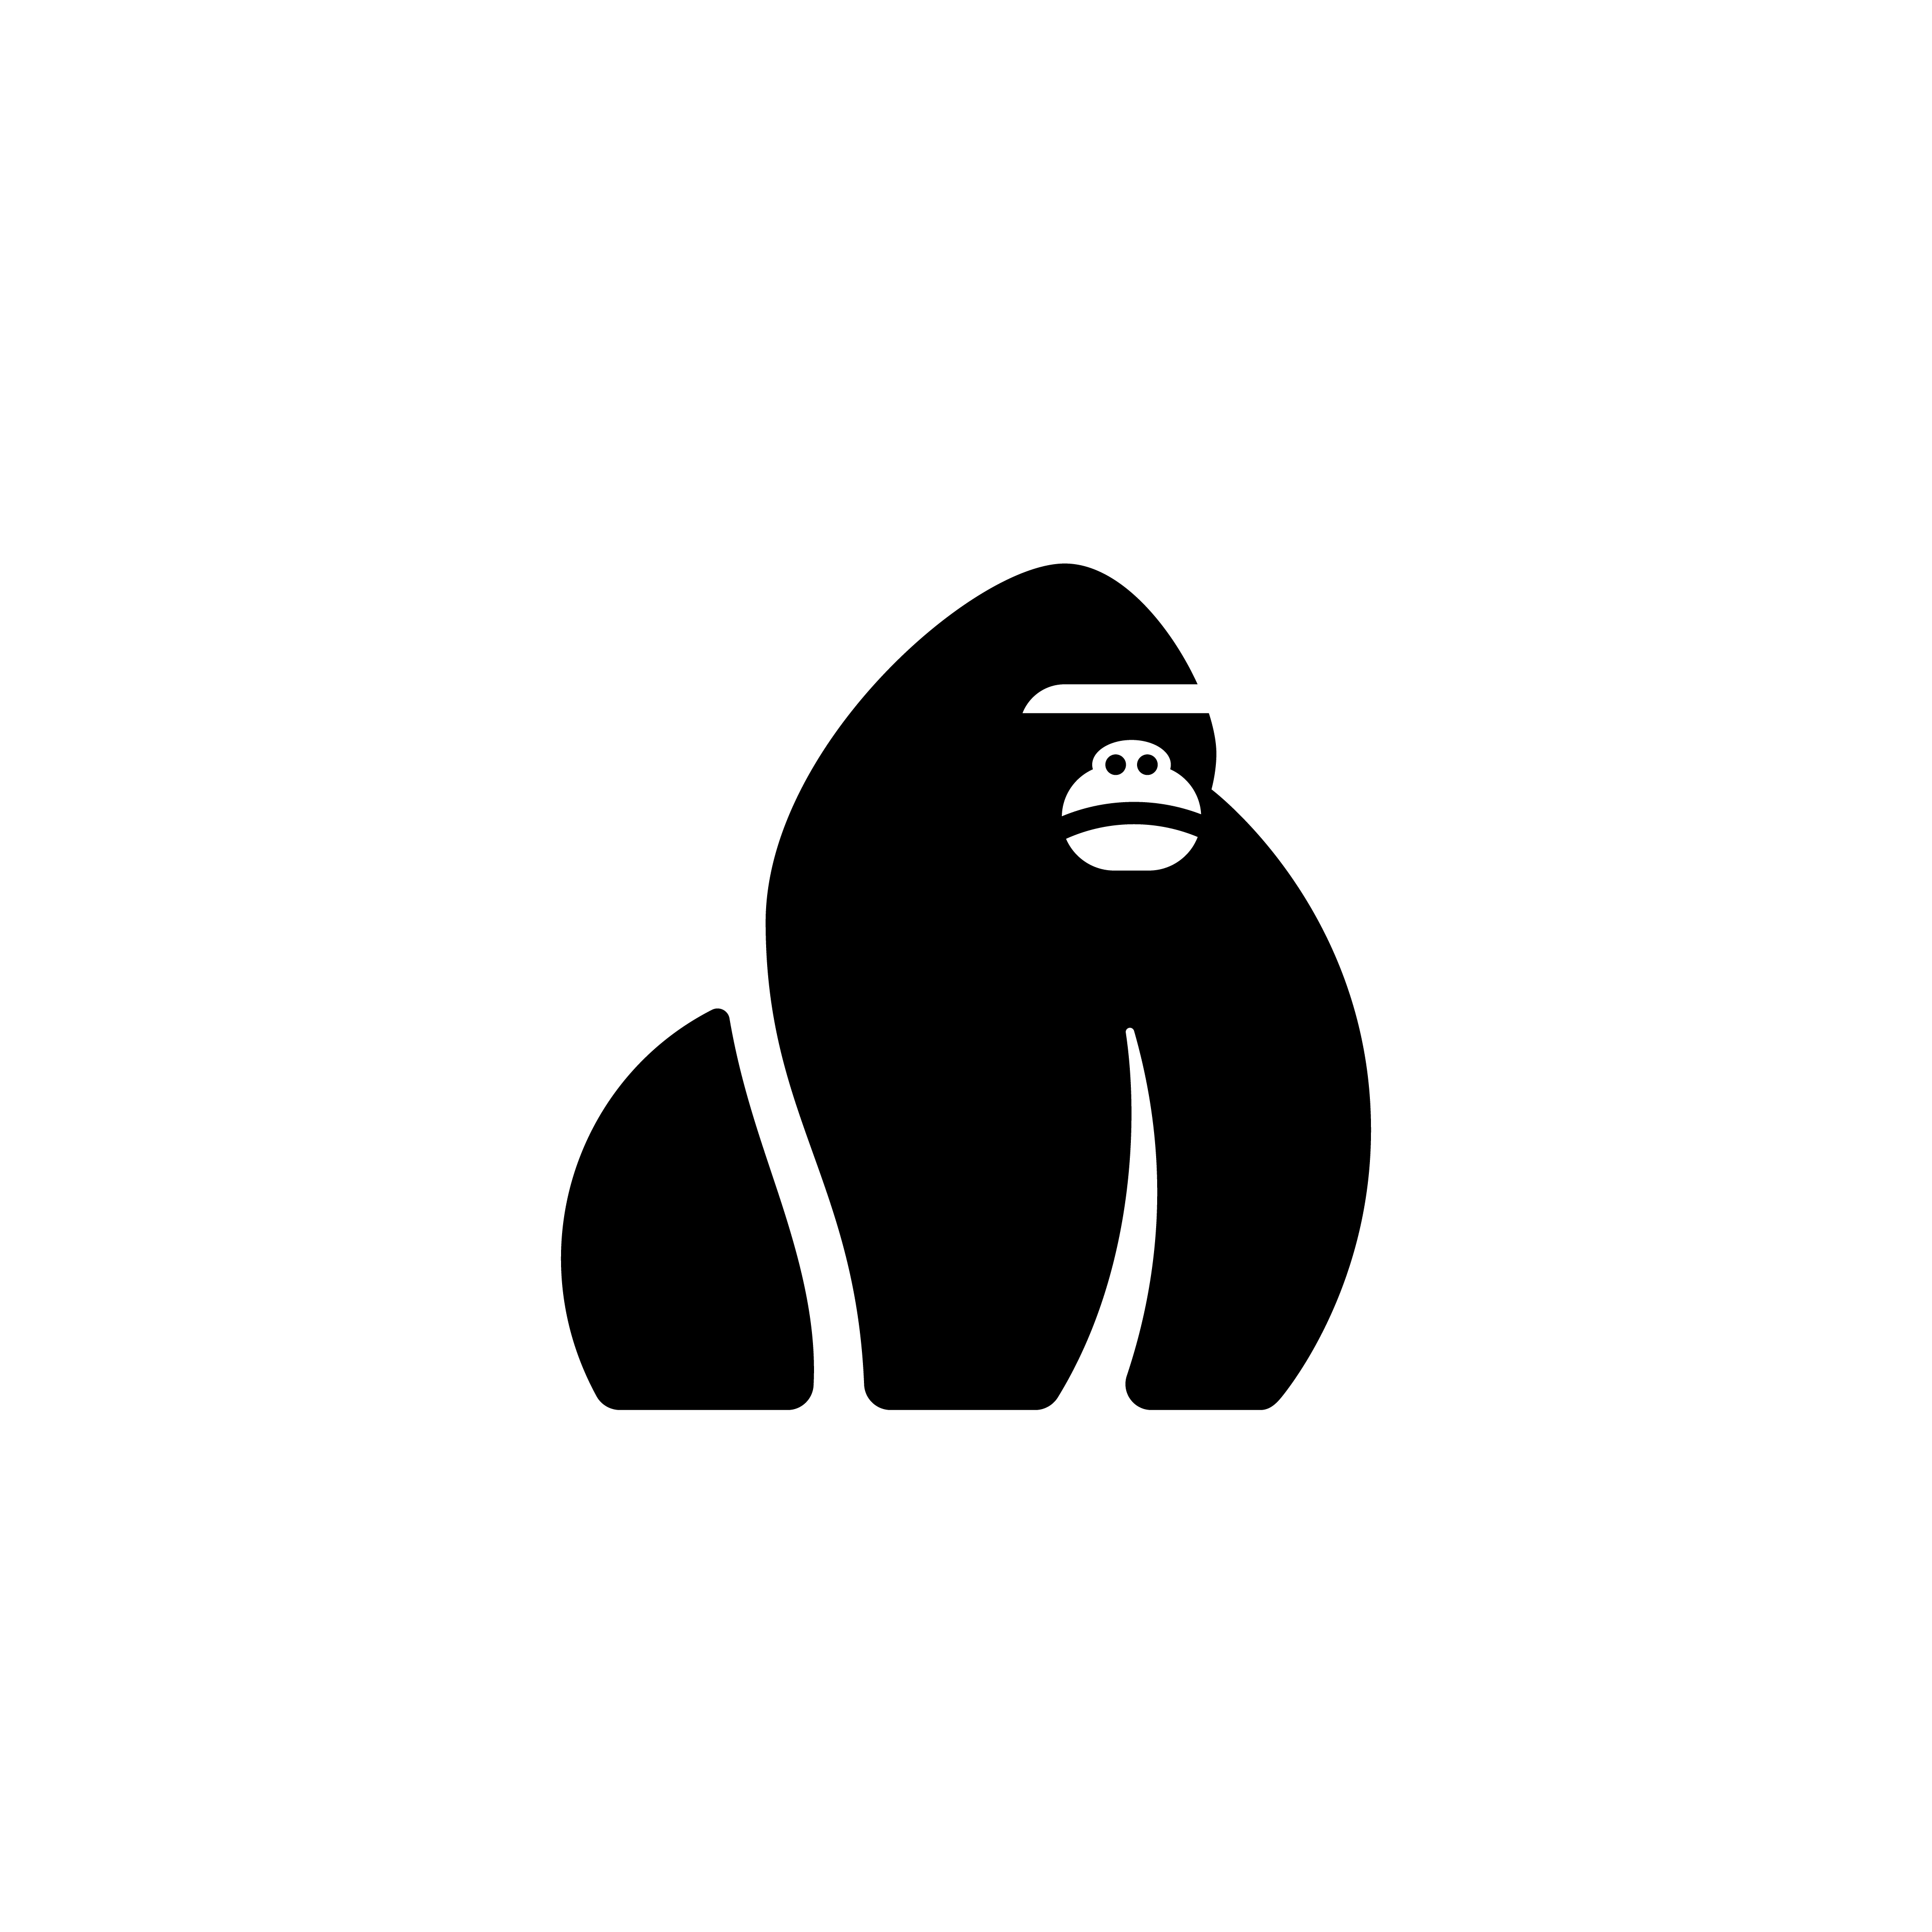 Gorilla logo design by logo designer Freelancer for your inspiration and for the worlds largest logo competition